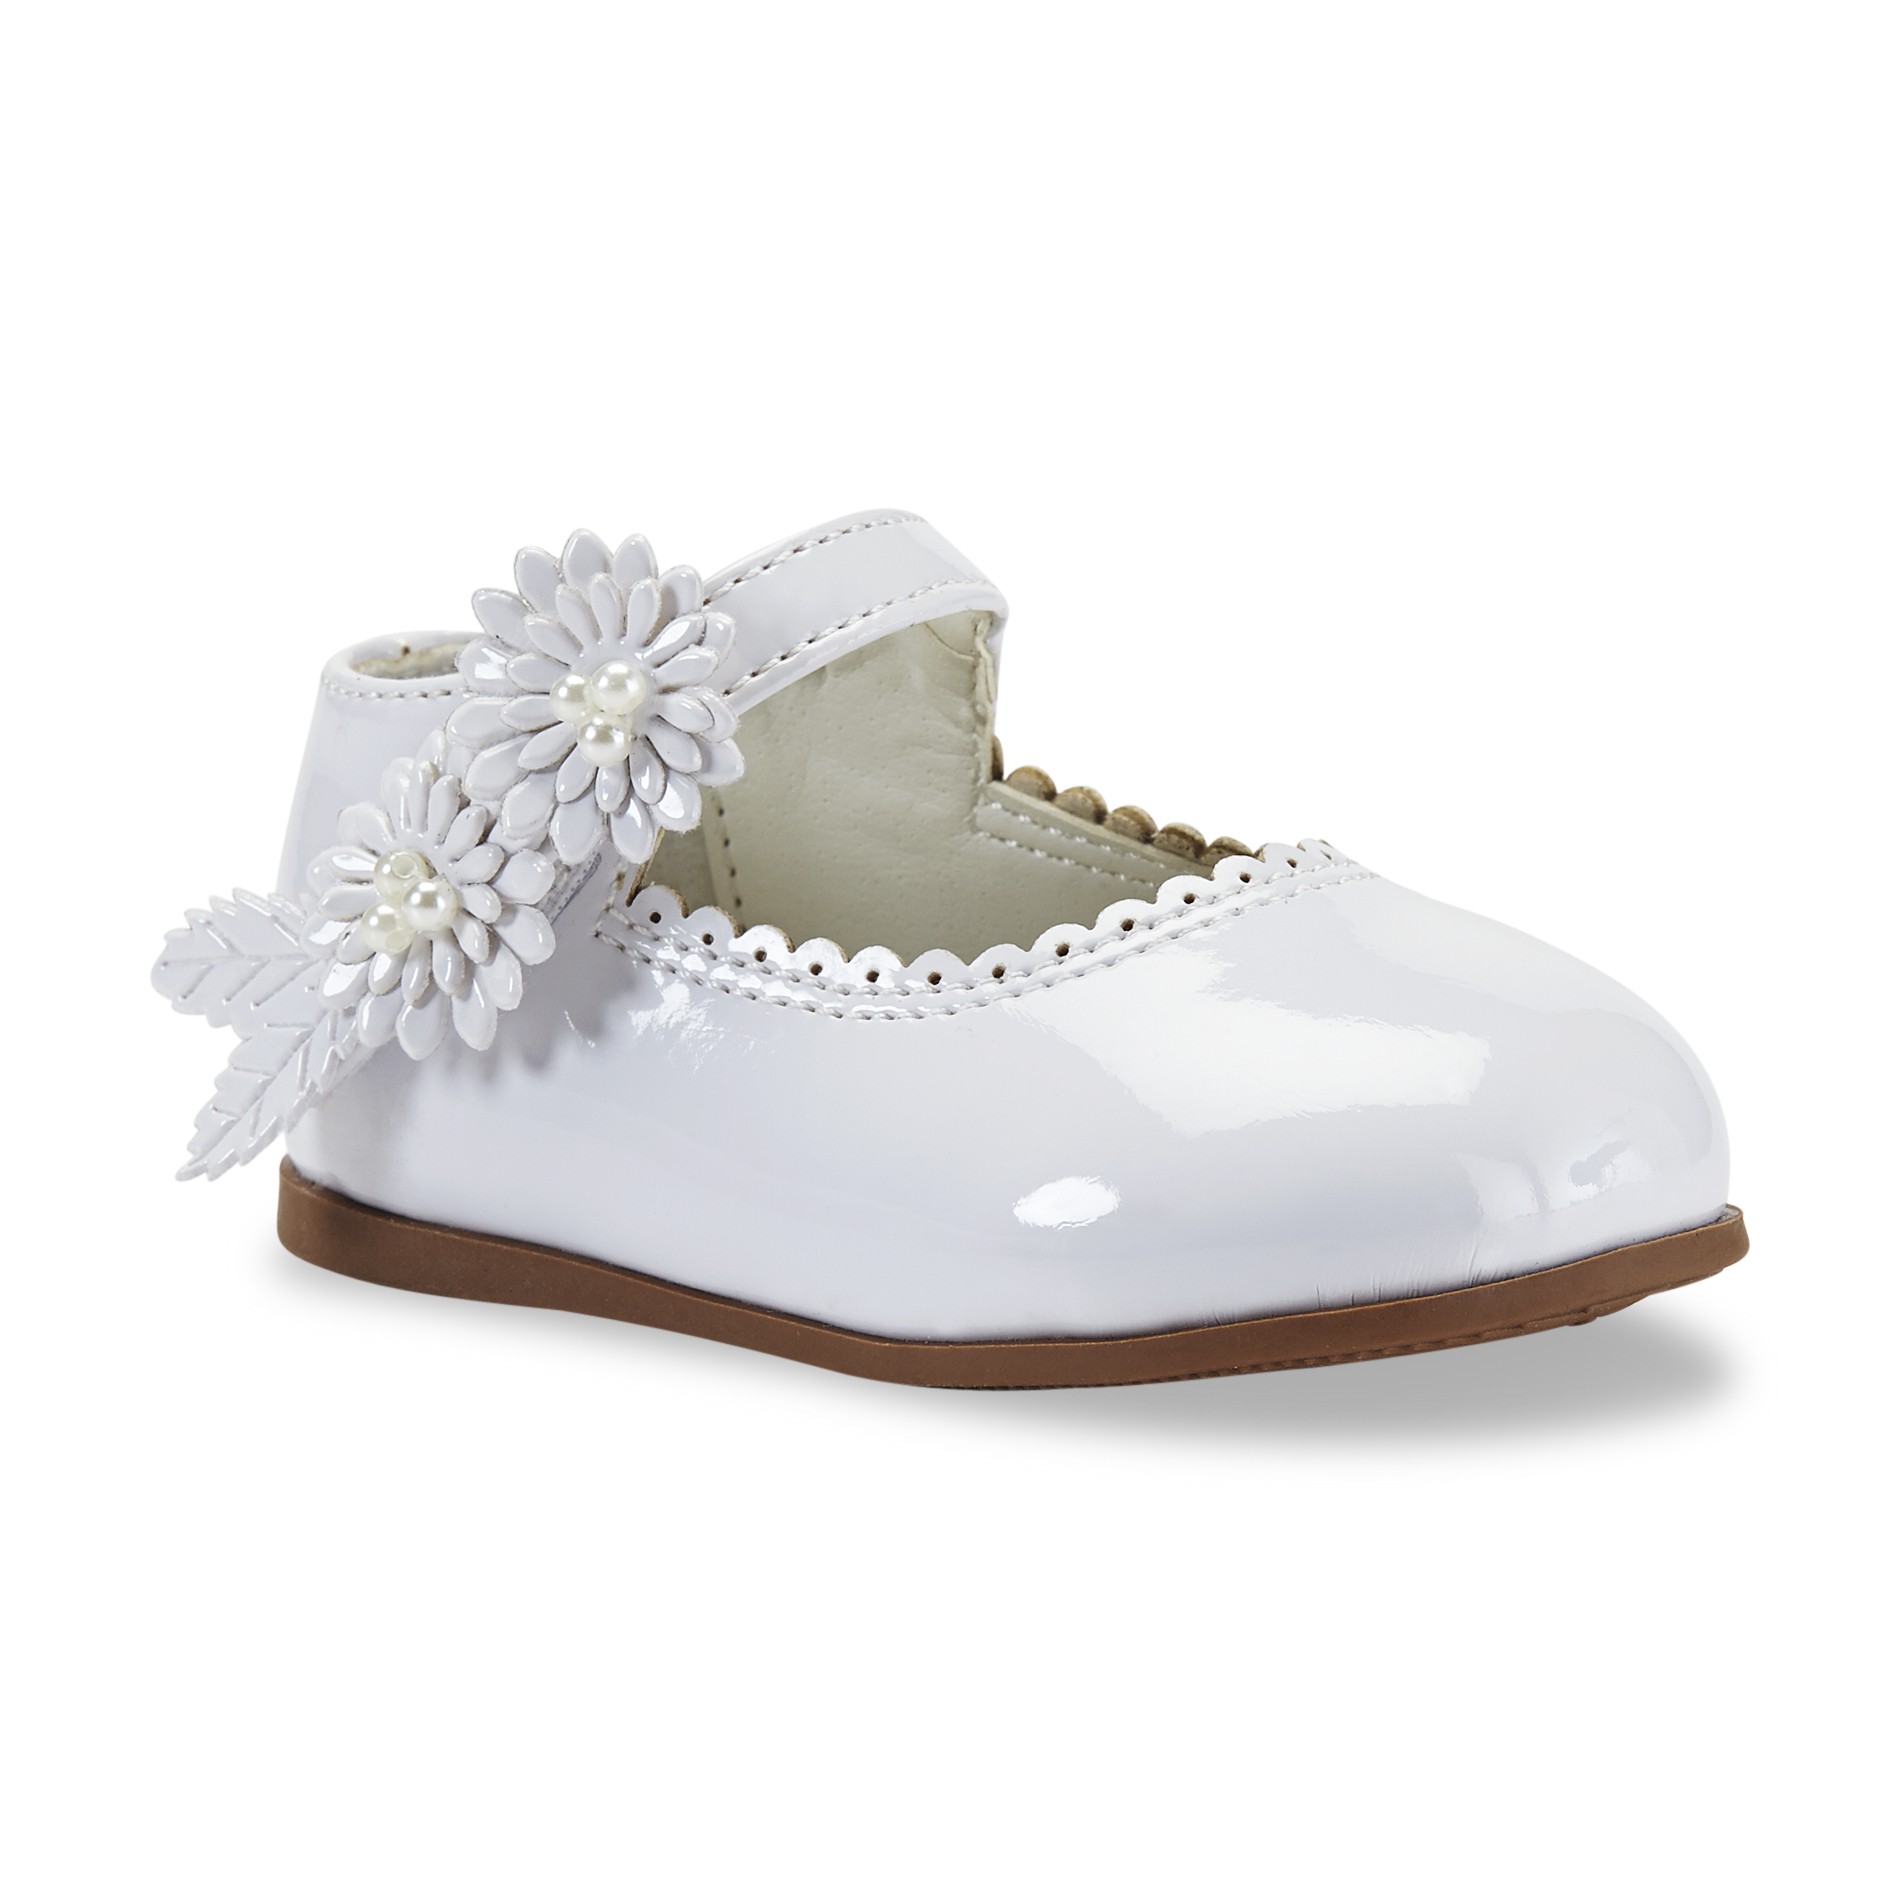 Josmo Baby Girl's Susan White Mary Jane Shoe